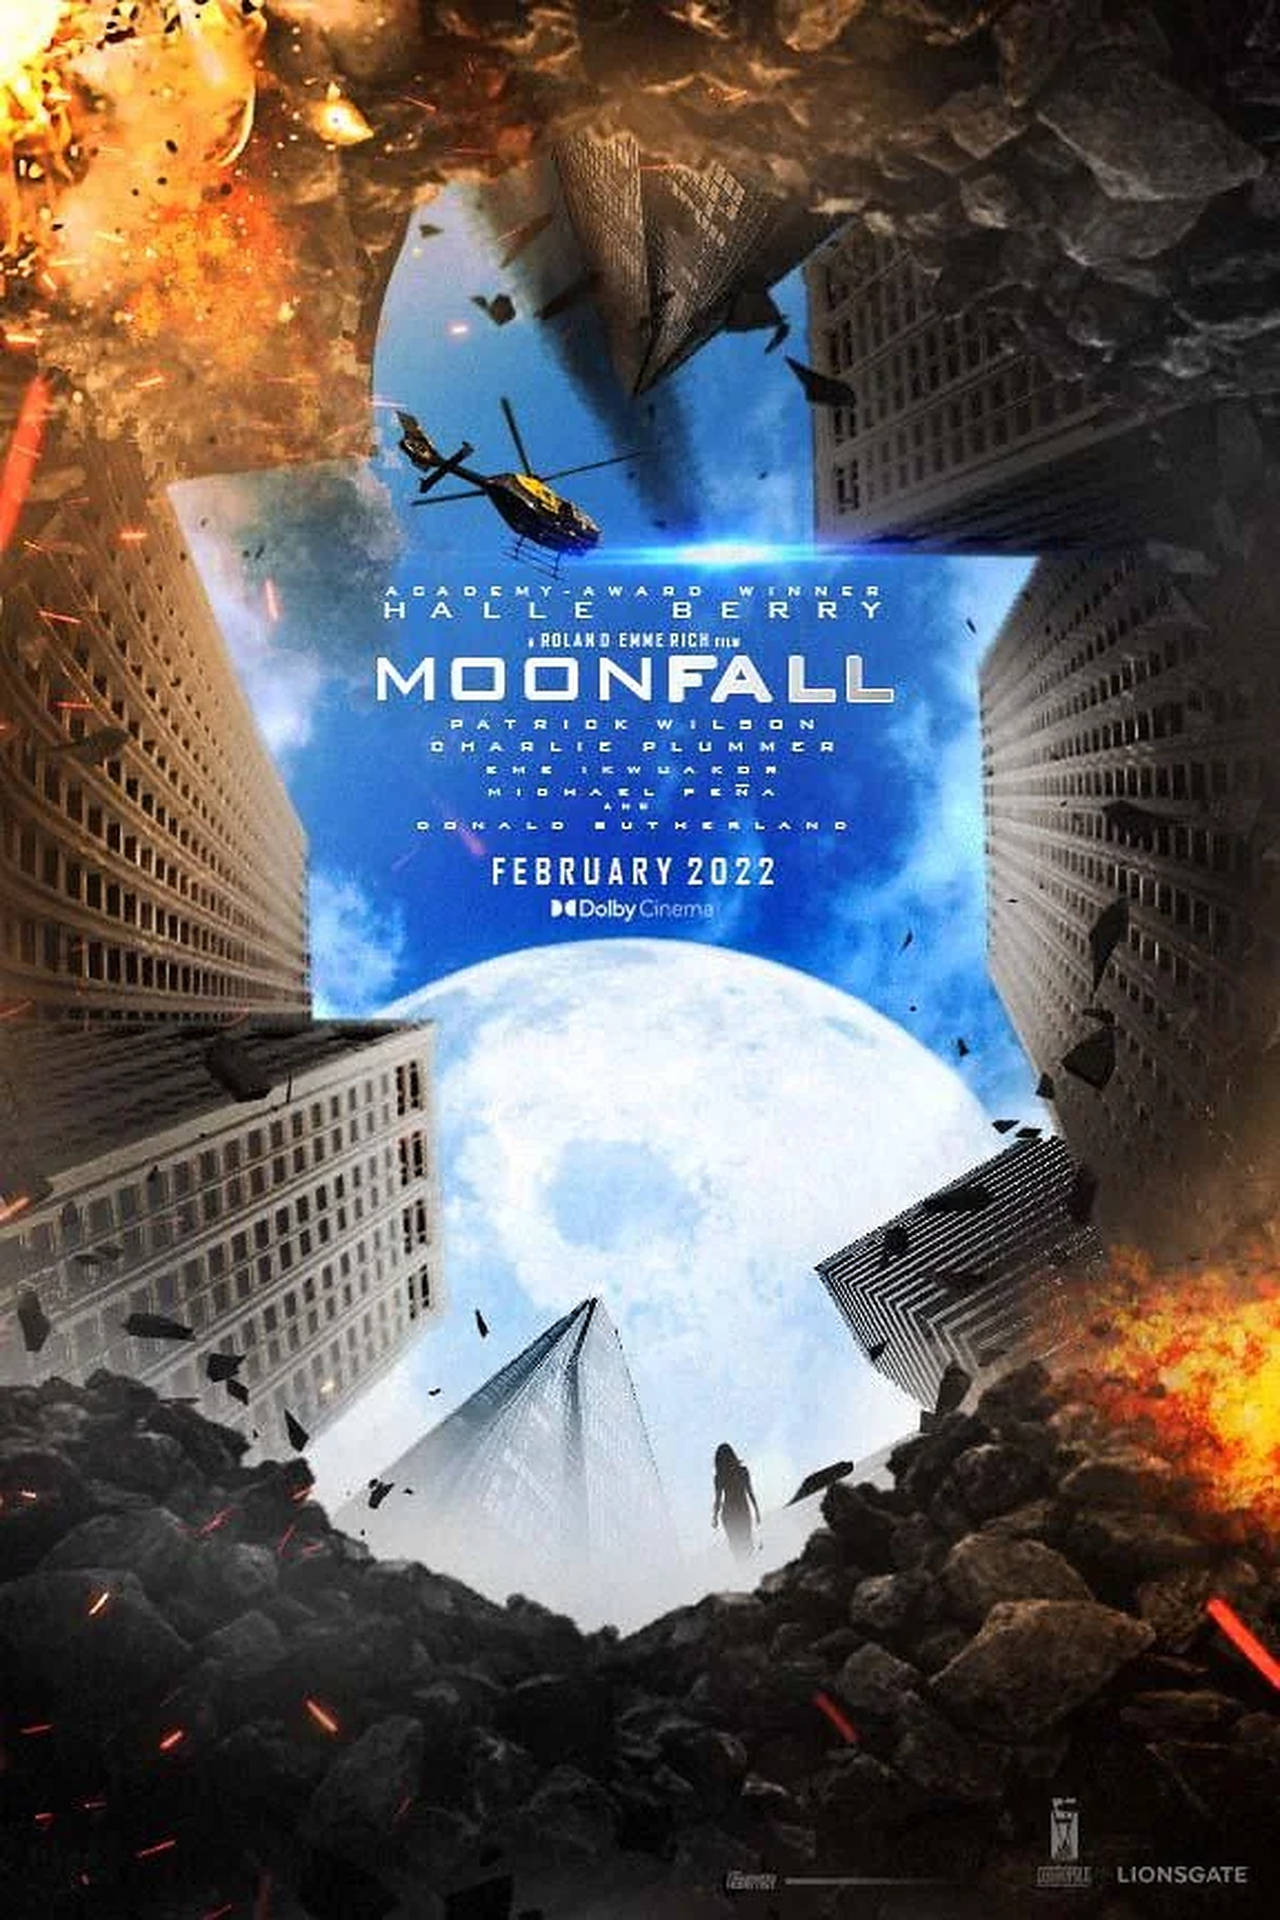 Moonfall Digital Poster Background